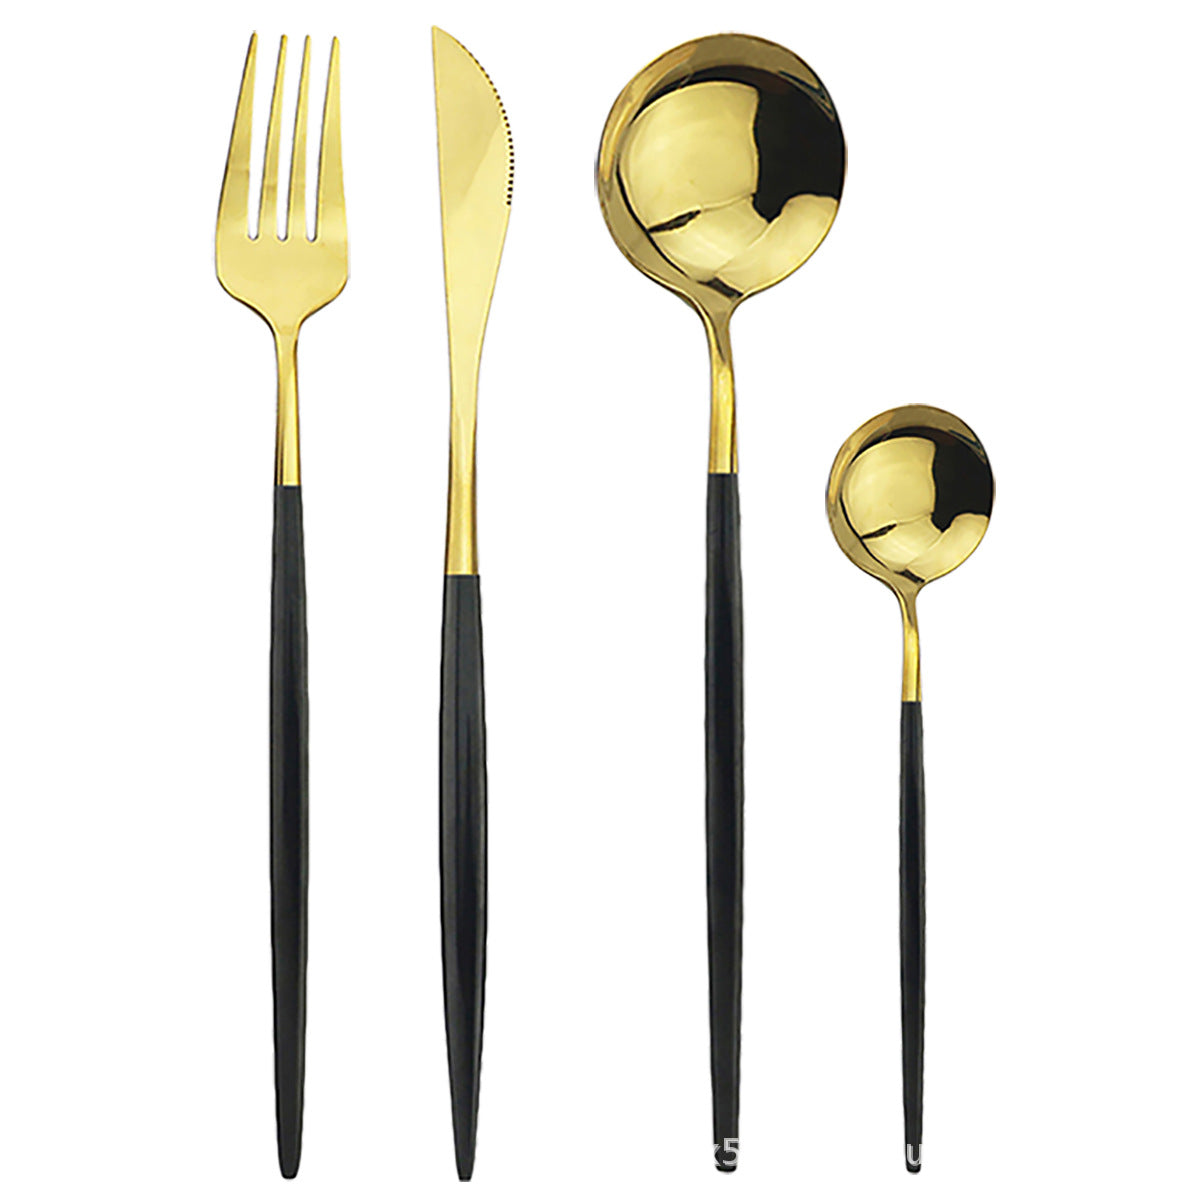 Stainless steel cutlery cutlery set - SELFTRITSS